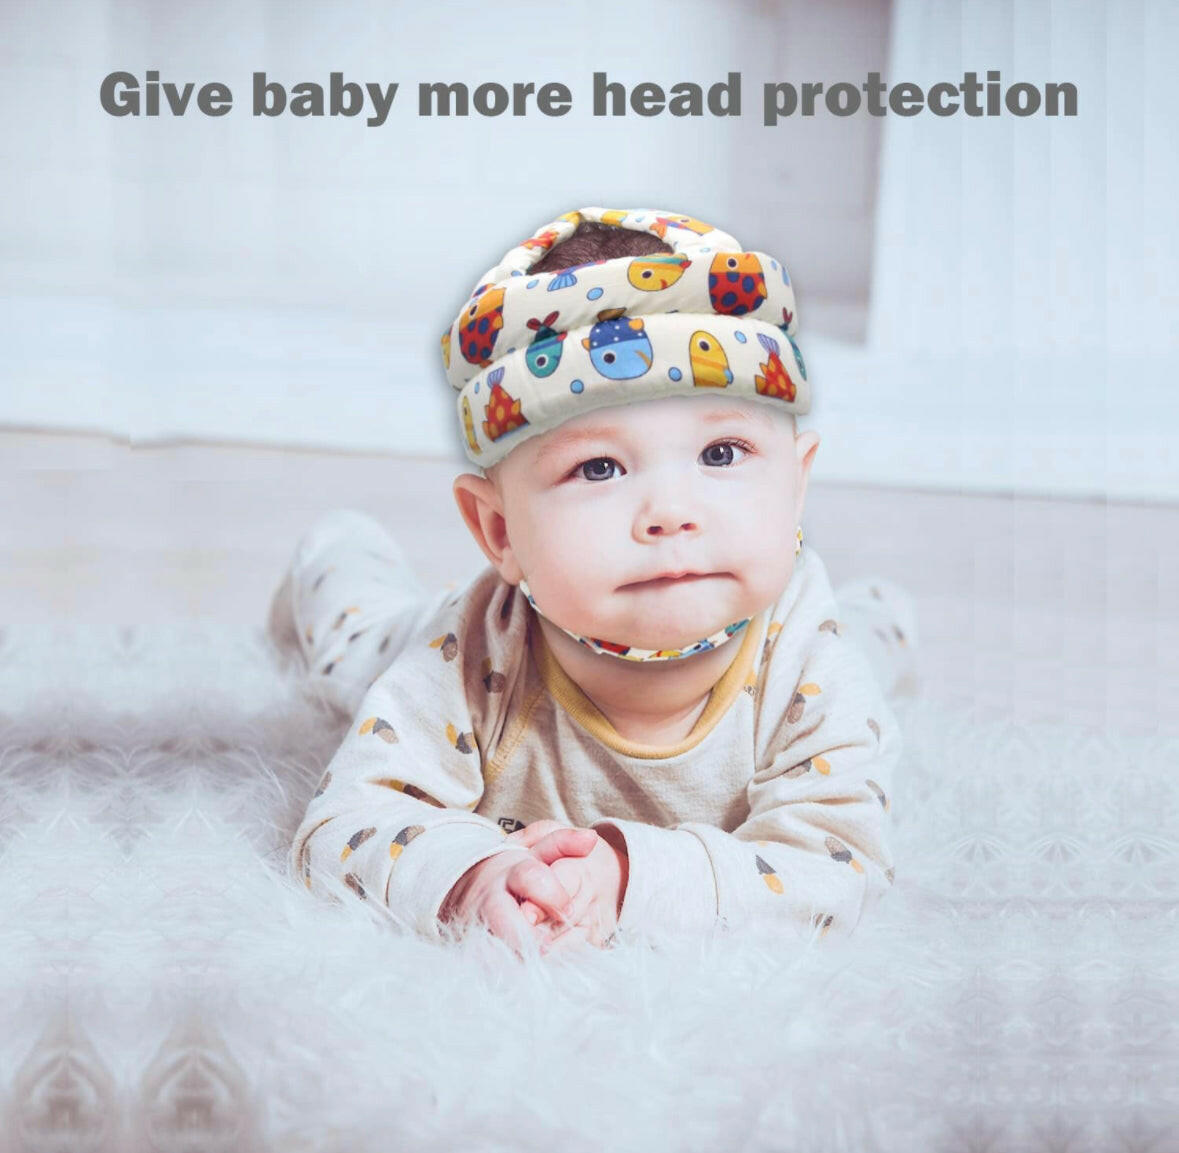 REFLYAWAY Baby Head Protector Baby Helmet for Crawling Walking.